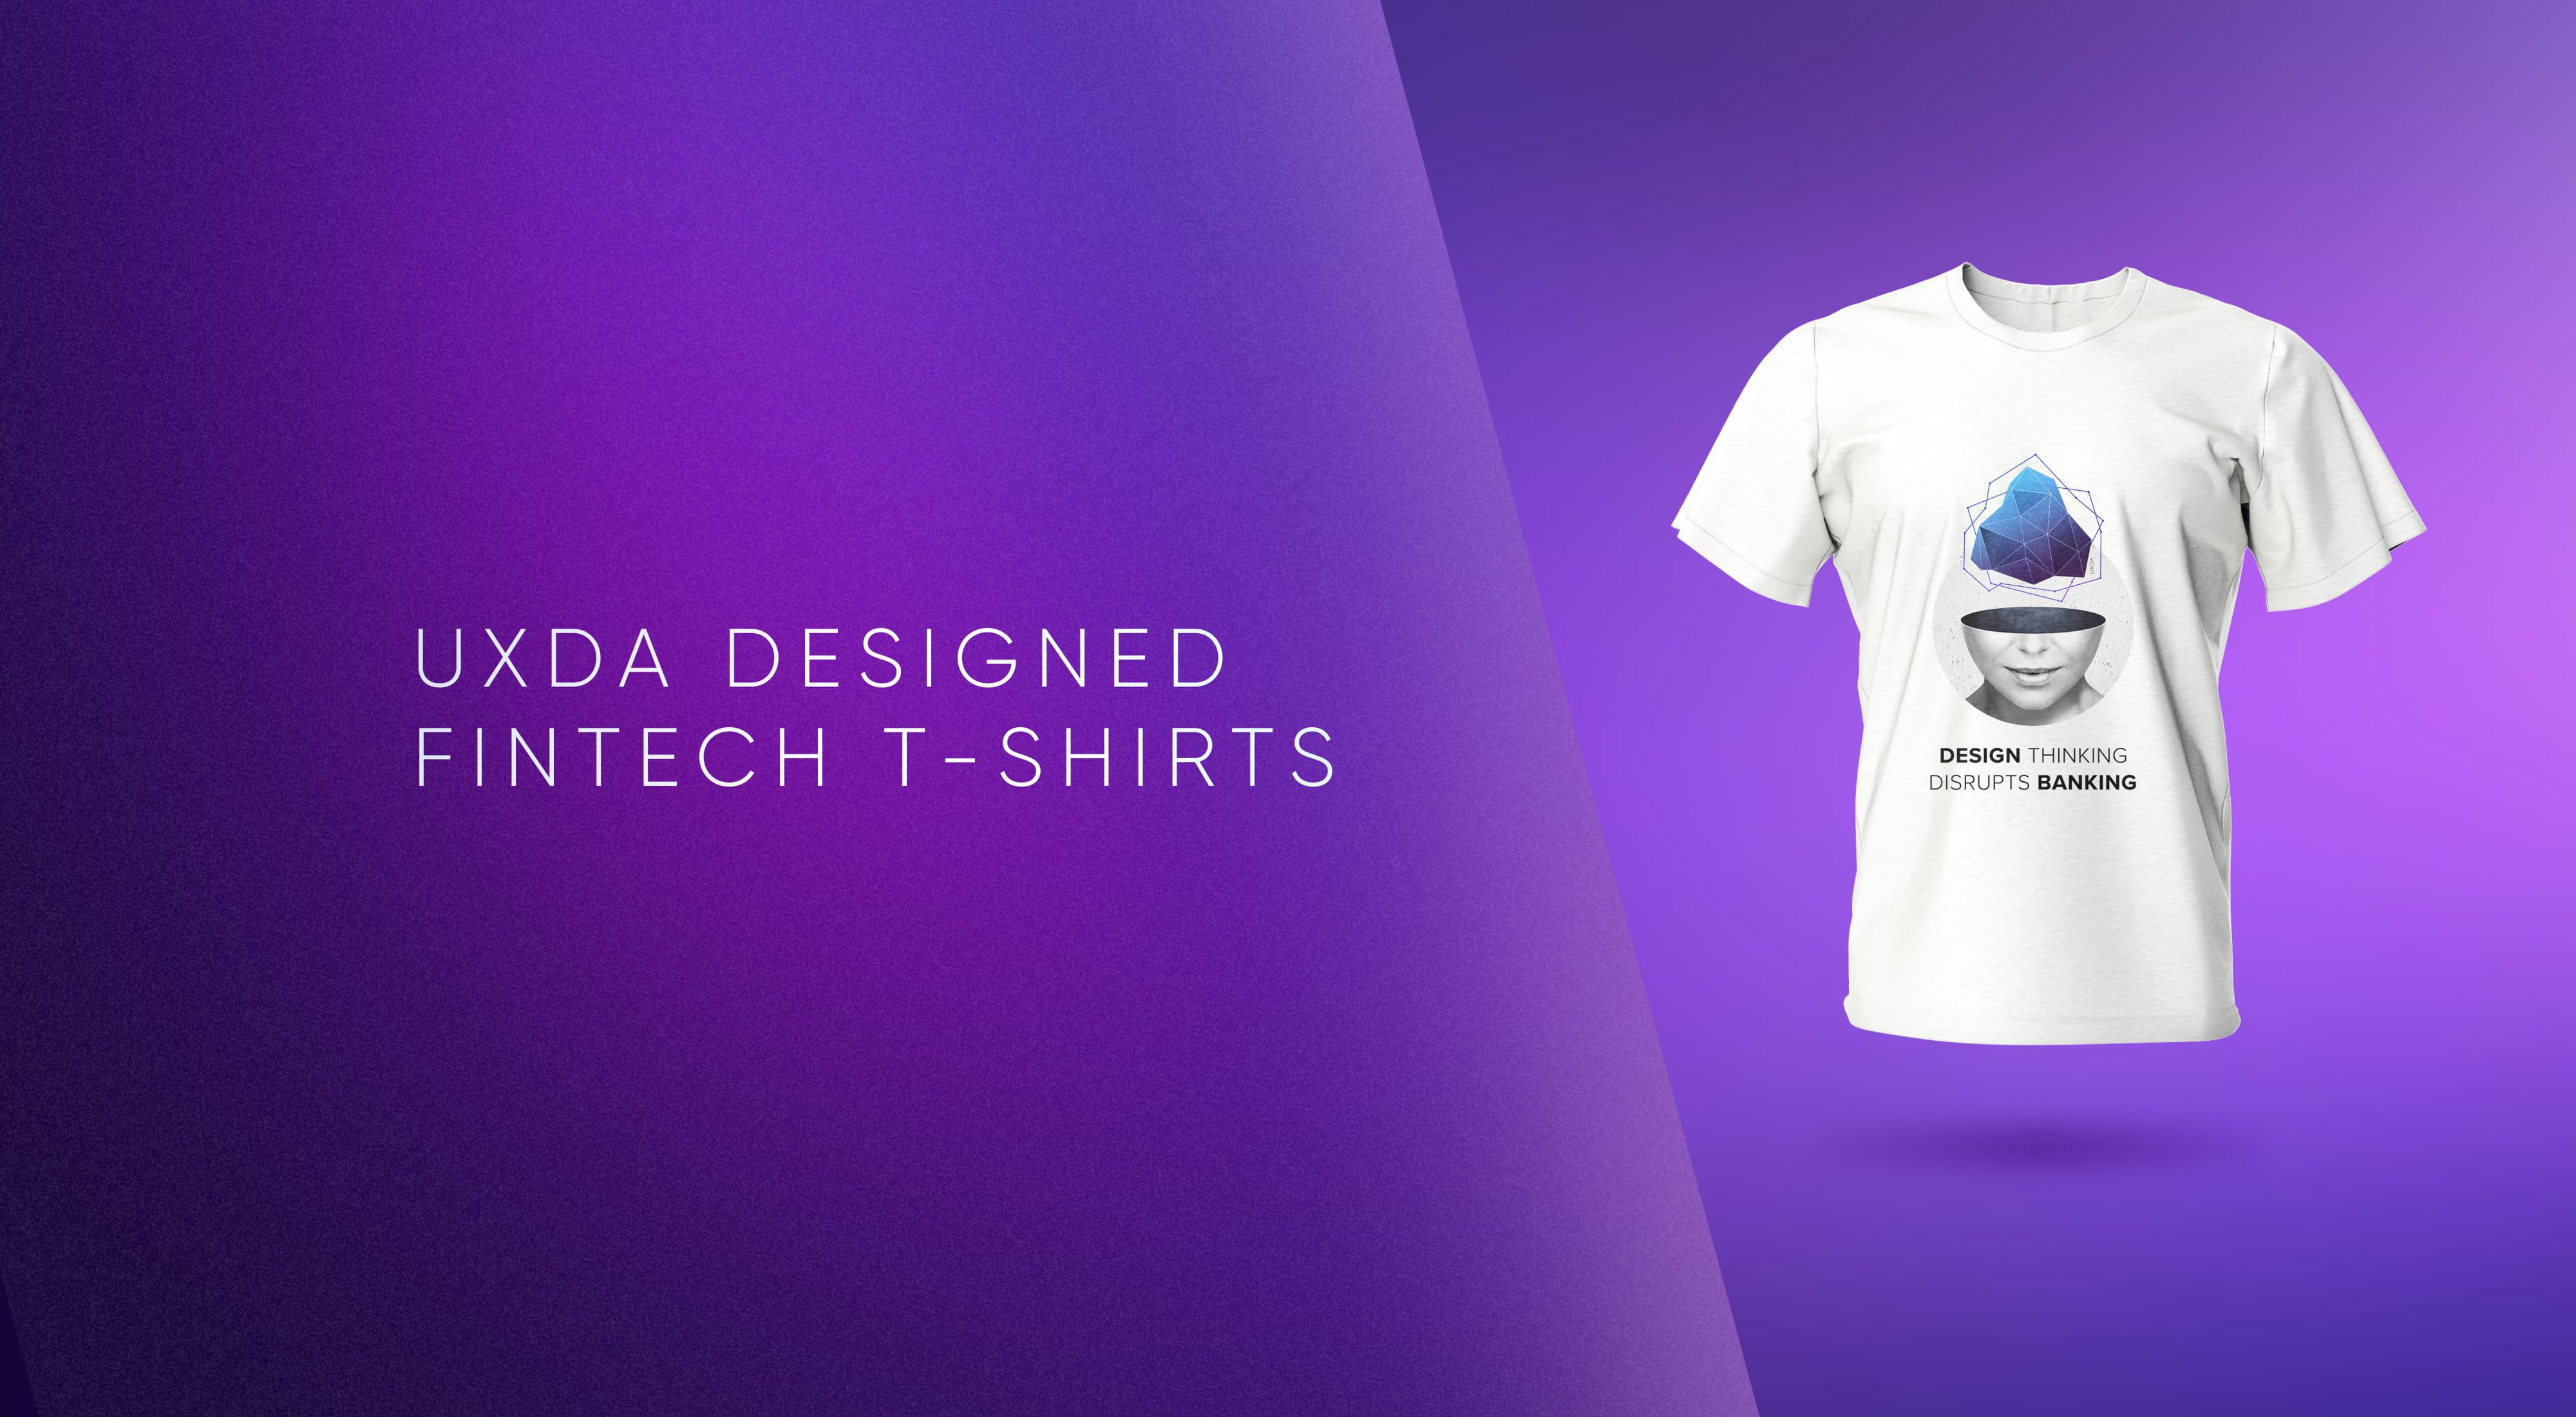 UXDA Has Designed Exclusive T-Shirts to Inspire Financial Disruptors